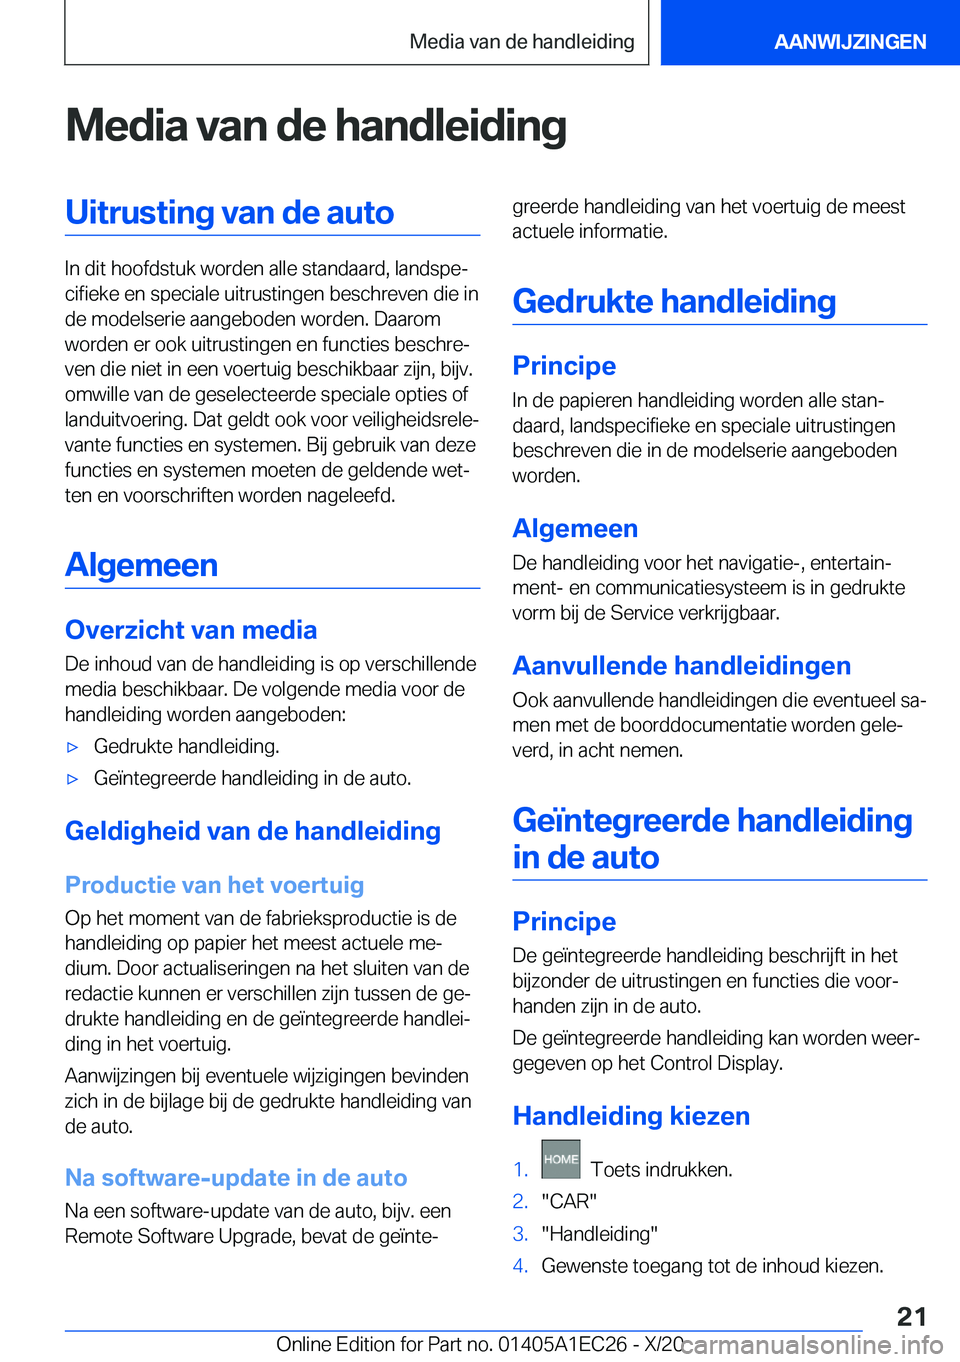 BMW 8 SERIES GRAN COUPE 2021  Instructieboekjes (in Dutch) �M�e�d�i�a��v�a�n��d�e��h�a�n�d�l�e�i�d�i�n�g�U�i�t�r�u�s�t�i�n�g��v�a�n��d�e��a�u�t�o
�I�n��d�i�t��h�o�o�f�d�s�t�u�k��w�o�r�d�e�n��a�l�l�e��s�t�a�n�d�a�a�r�d�,��l�a�n�d�s�p�ej�c�i�f�i�e�